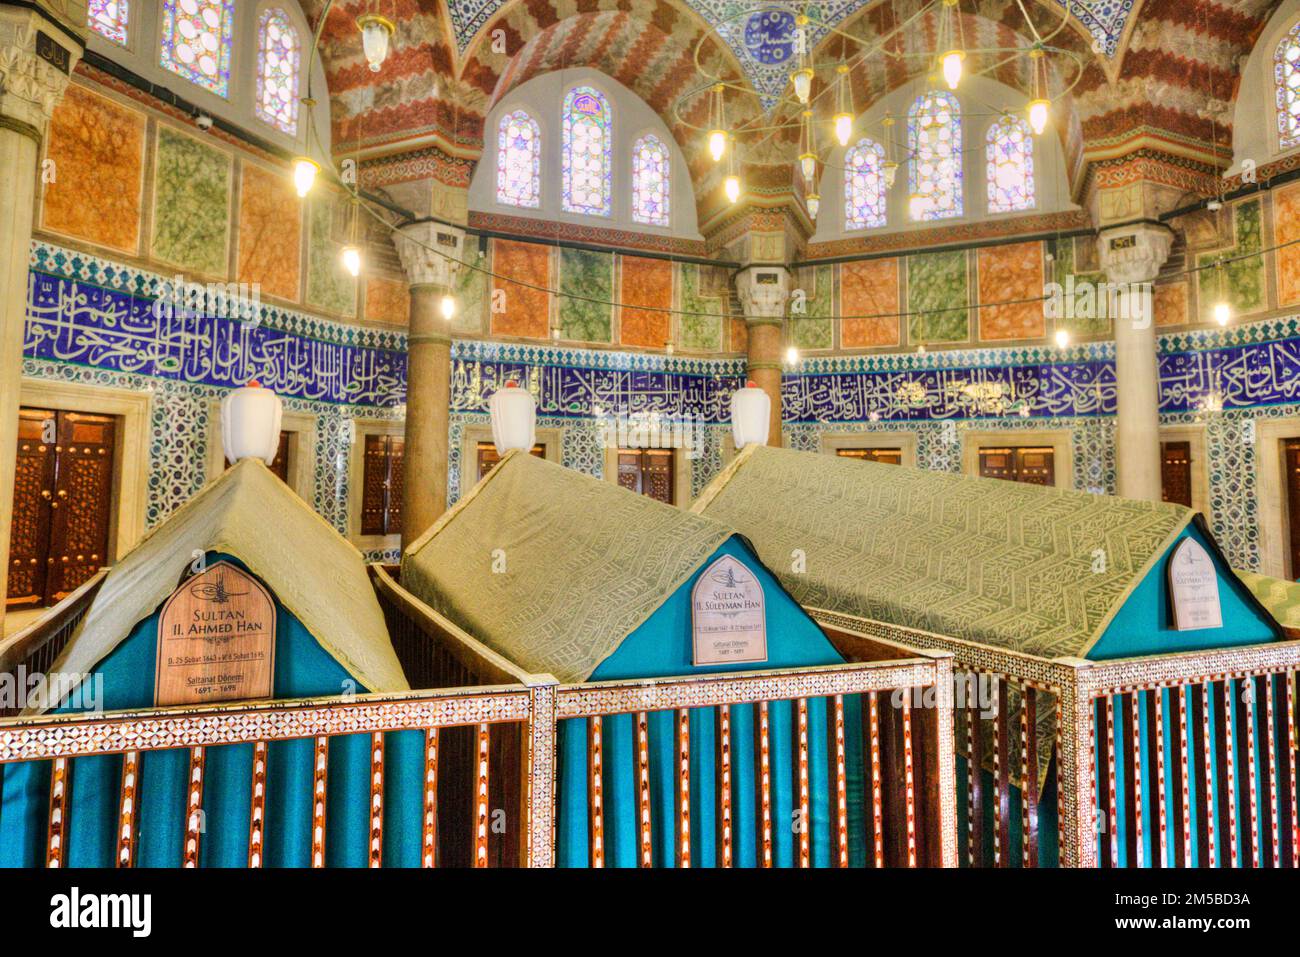 Mausoleum of Sultan Suleyman, Suleymaniye Mosque, 1550, UNESCO World Heritage Site, Istanbul, Turkey Stock Photo